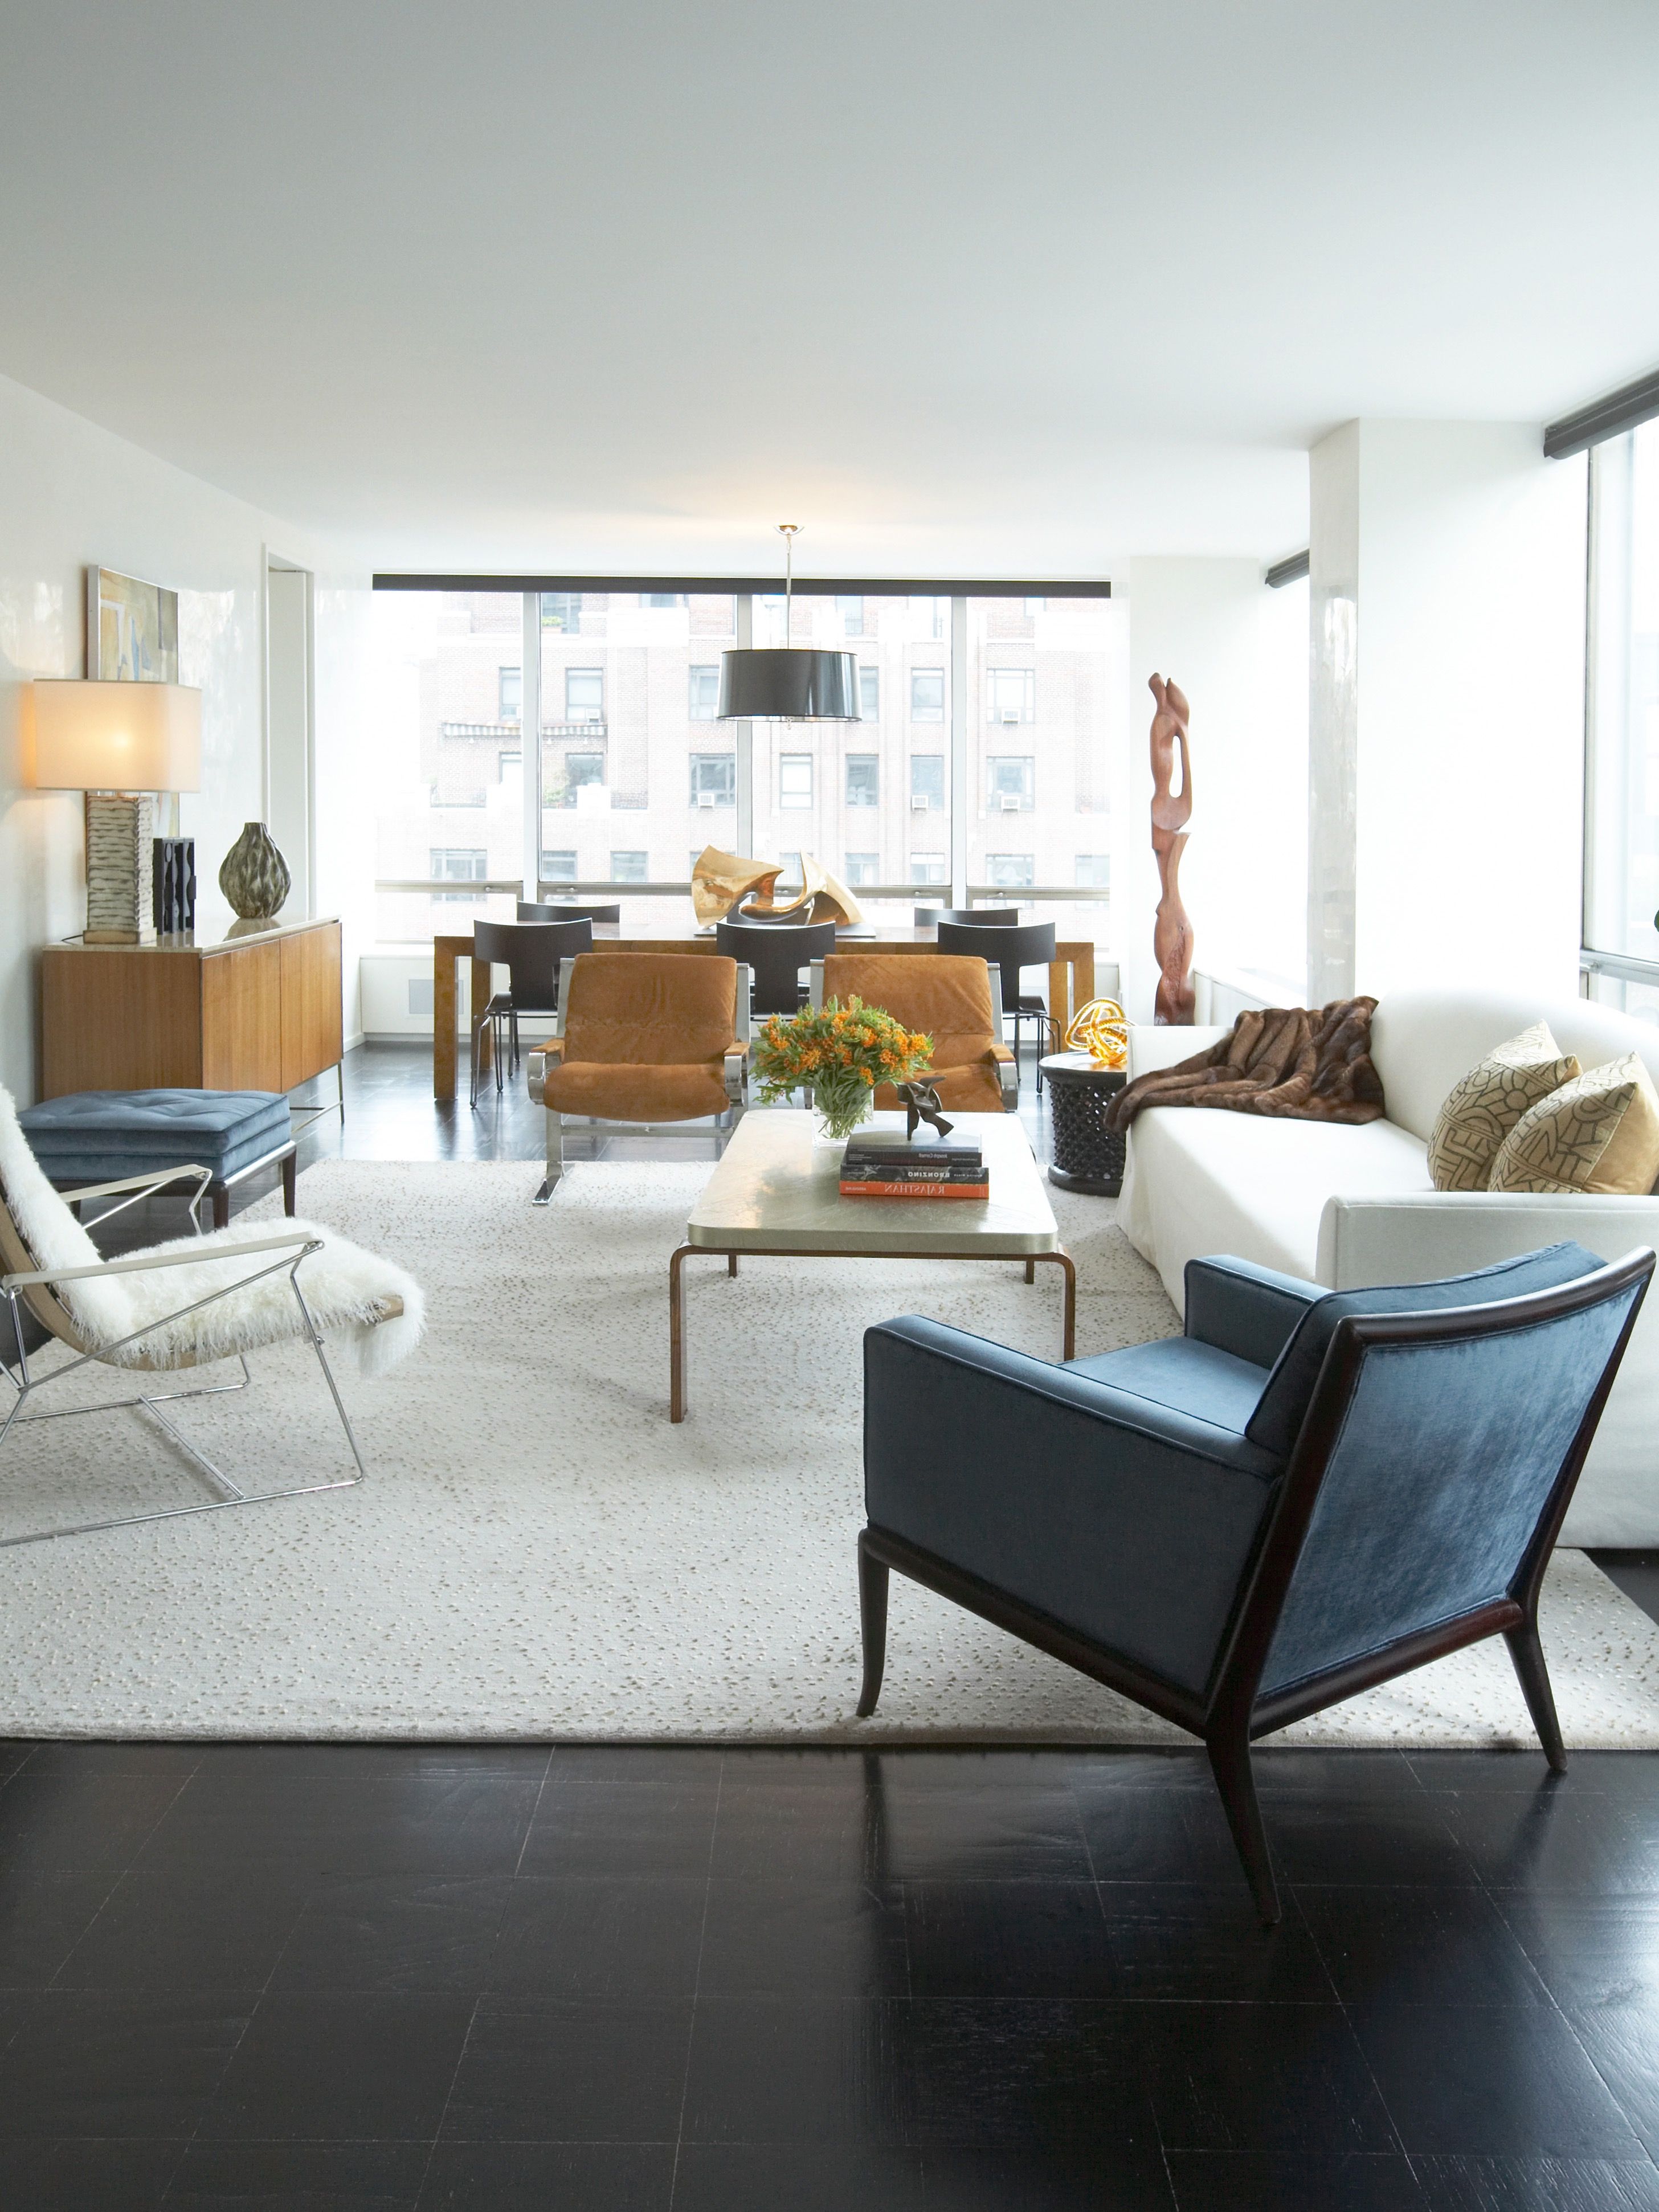 20 Best Minimalist Living Room Design And Decor Ideas ...